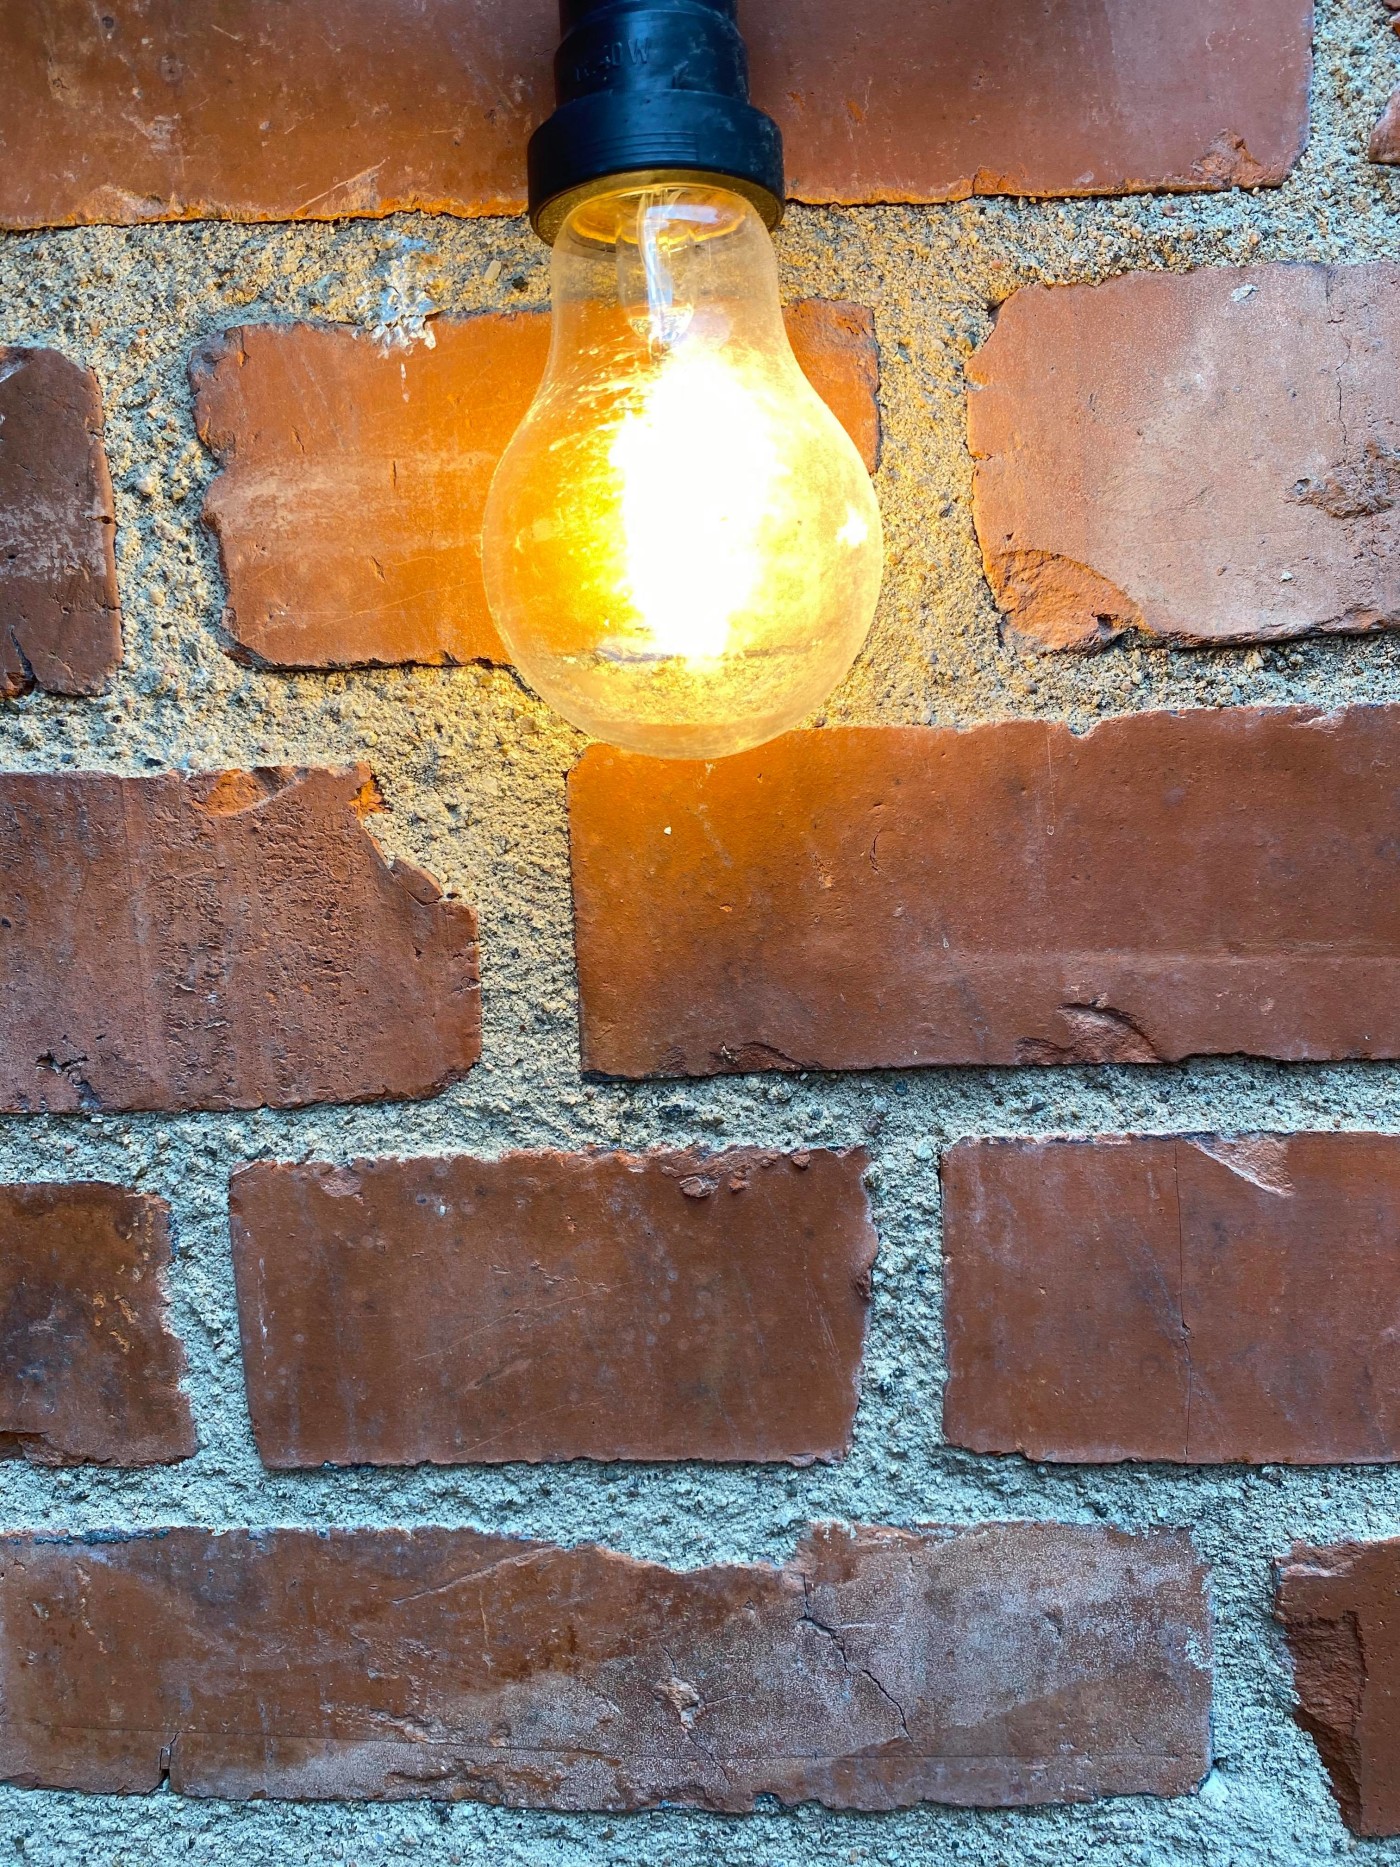 Glowing light bulb